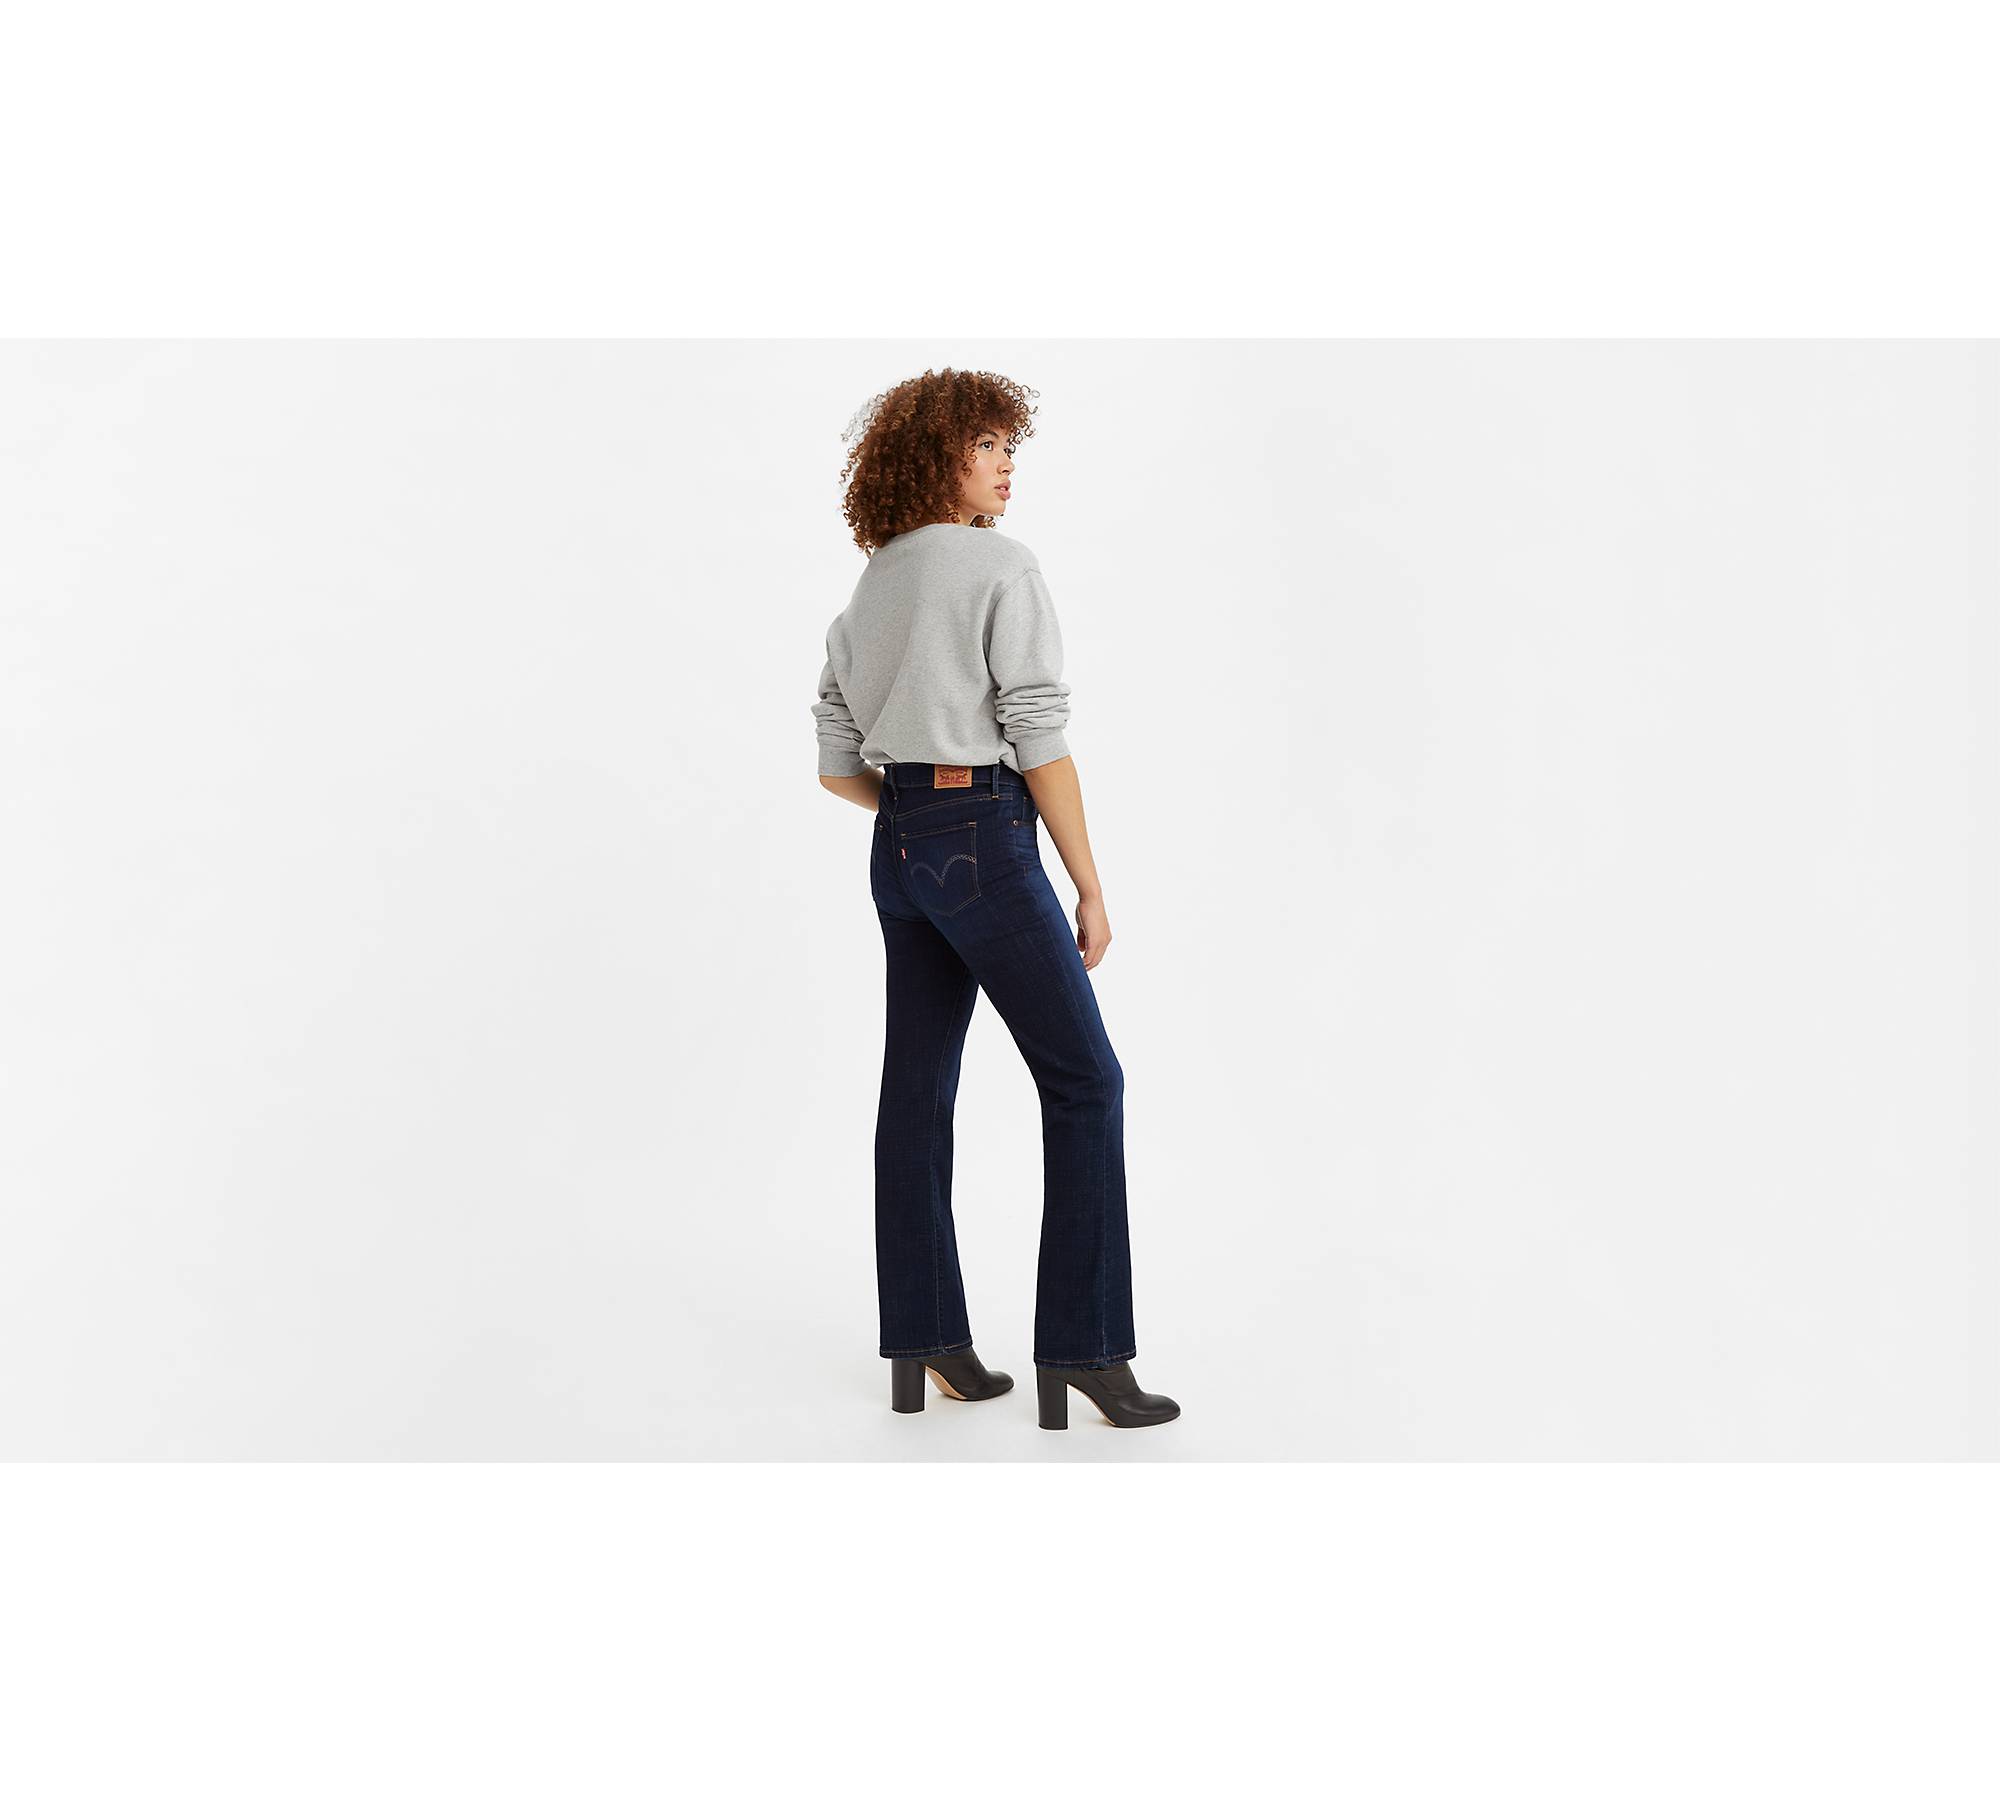 Women's Levi's® Classic Bootcut Jeans